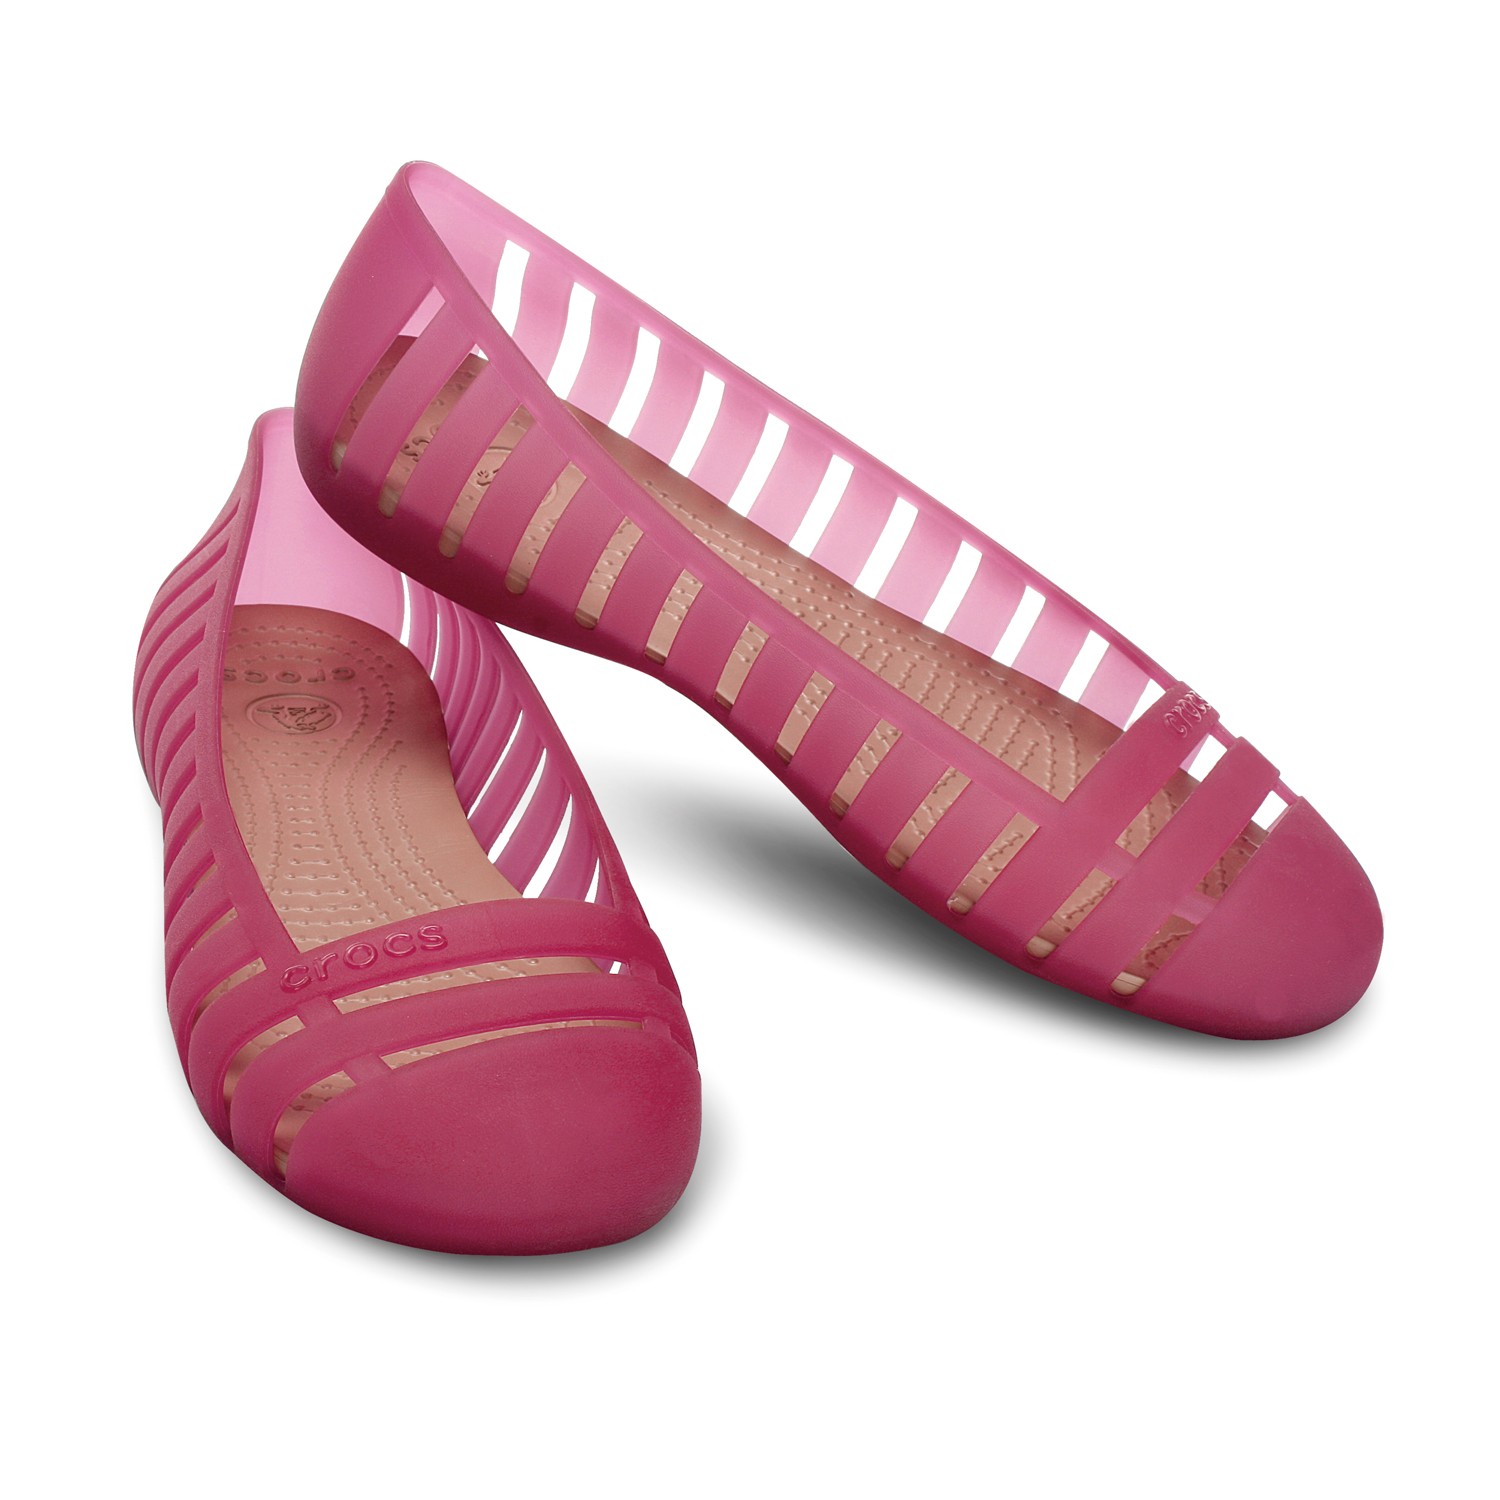 Crocs Adrina Flat II - Sandals 